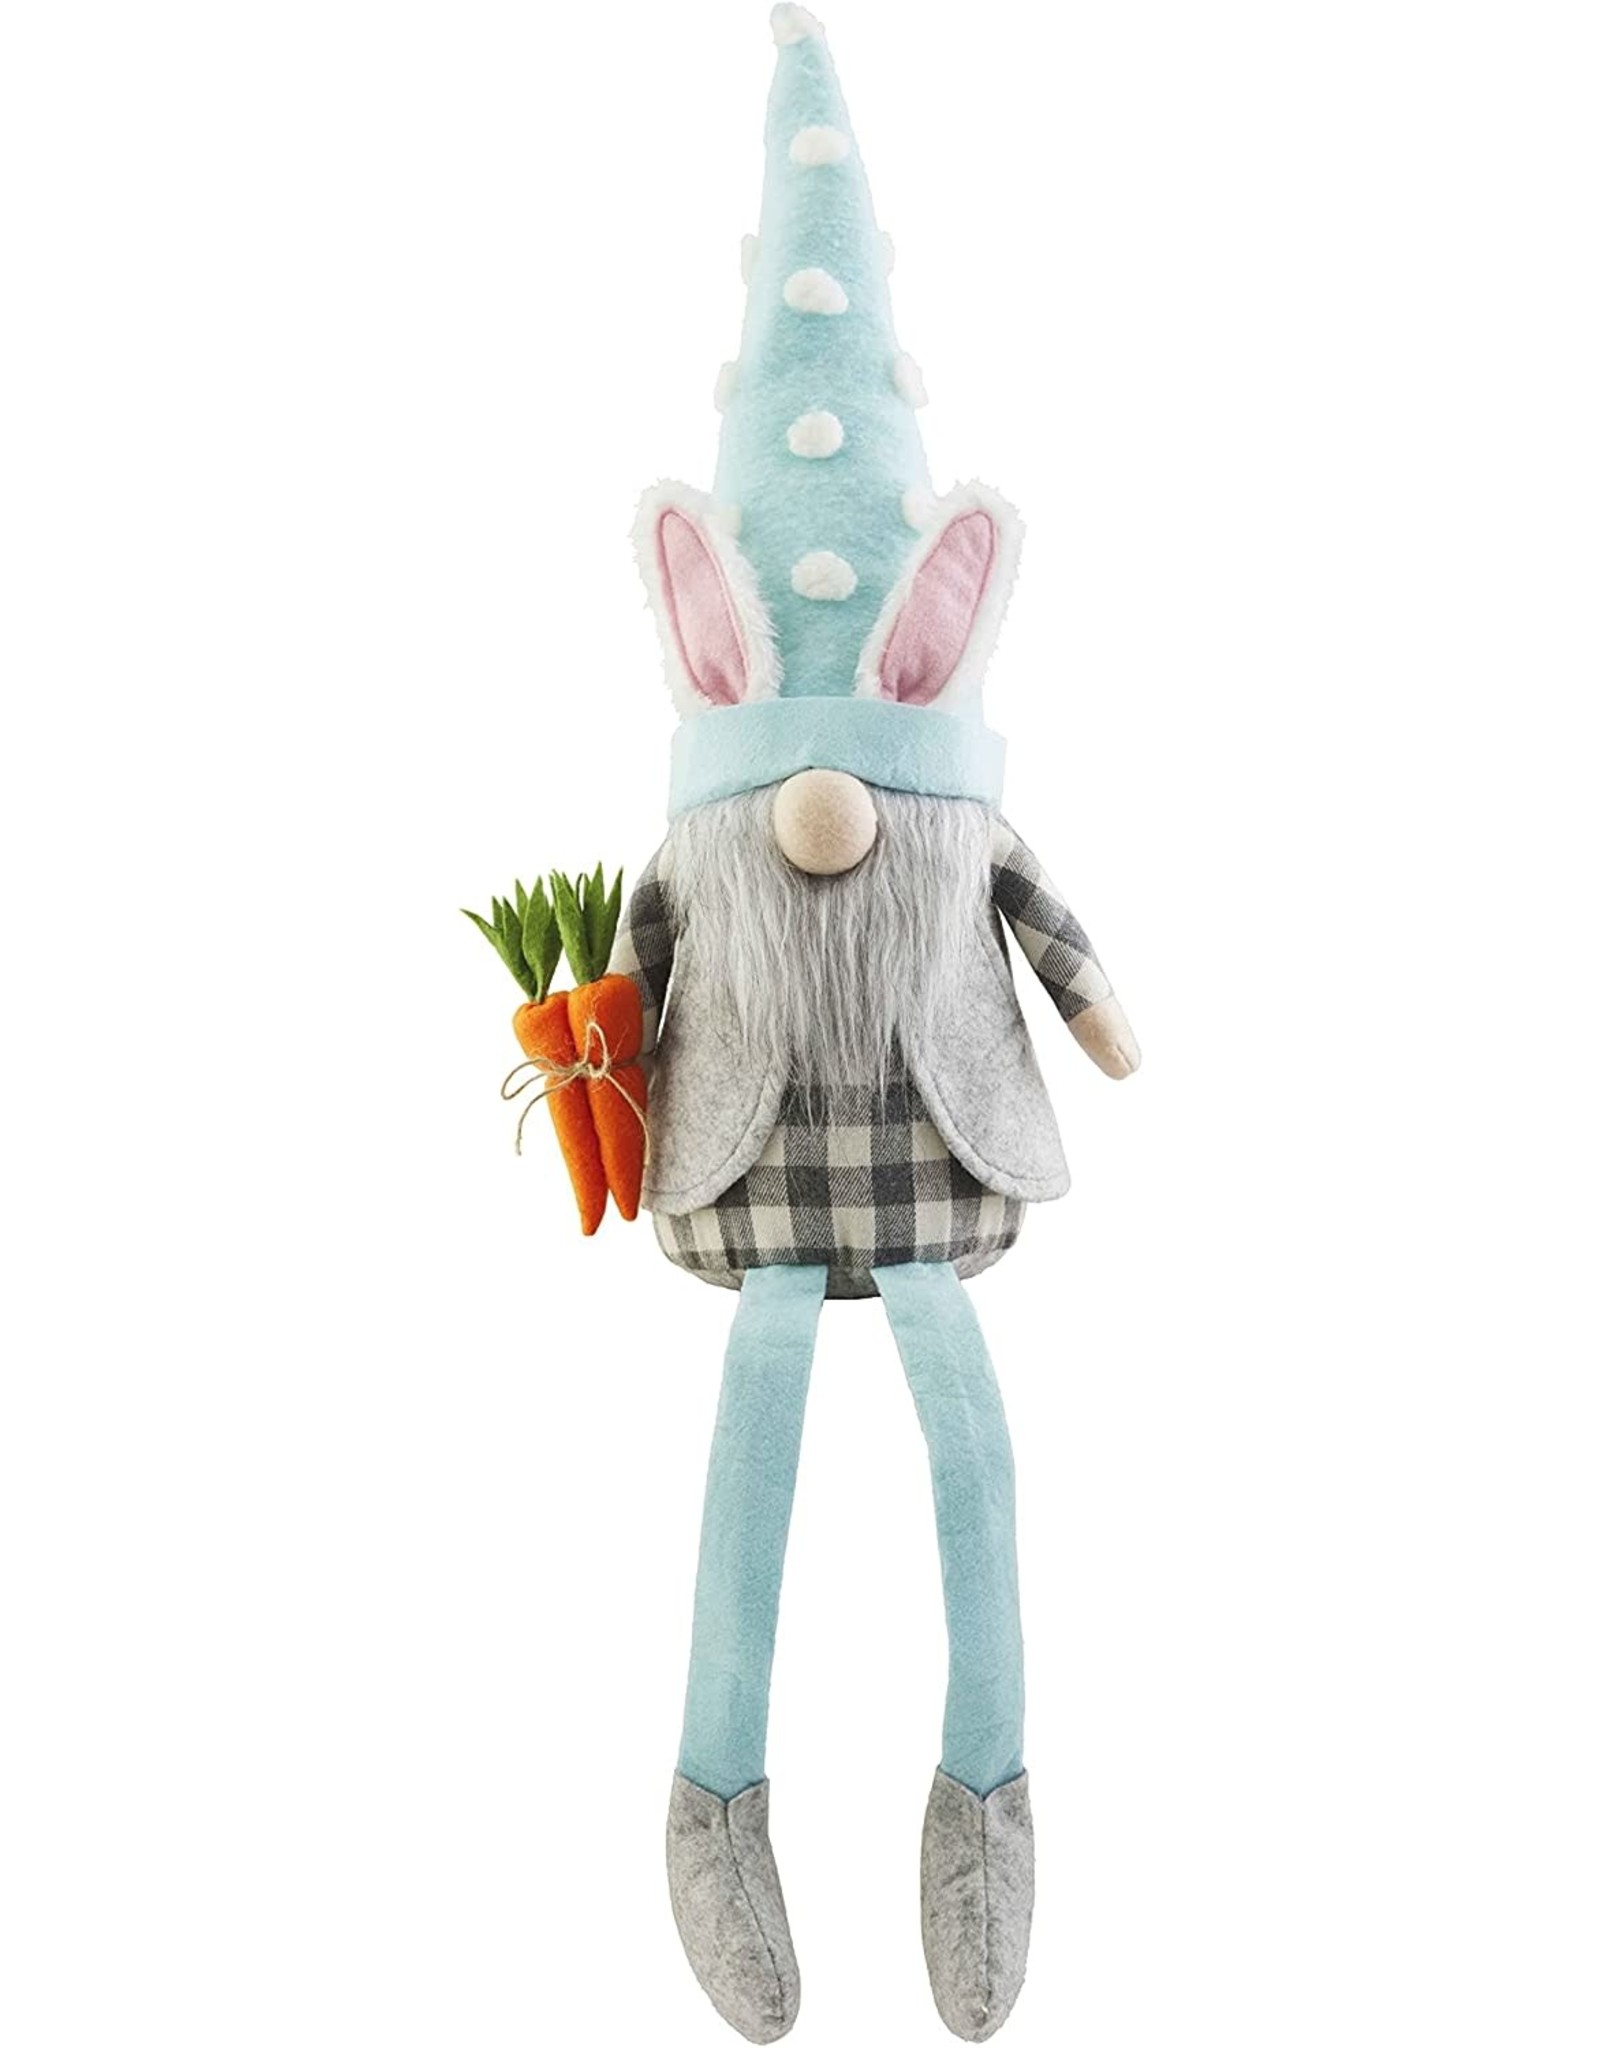 Mud Pie Gnomes Easter Bunny Ear Dangle Leg Gnome Holding Carrot LG